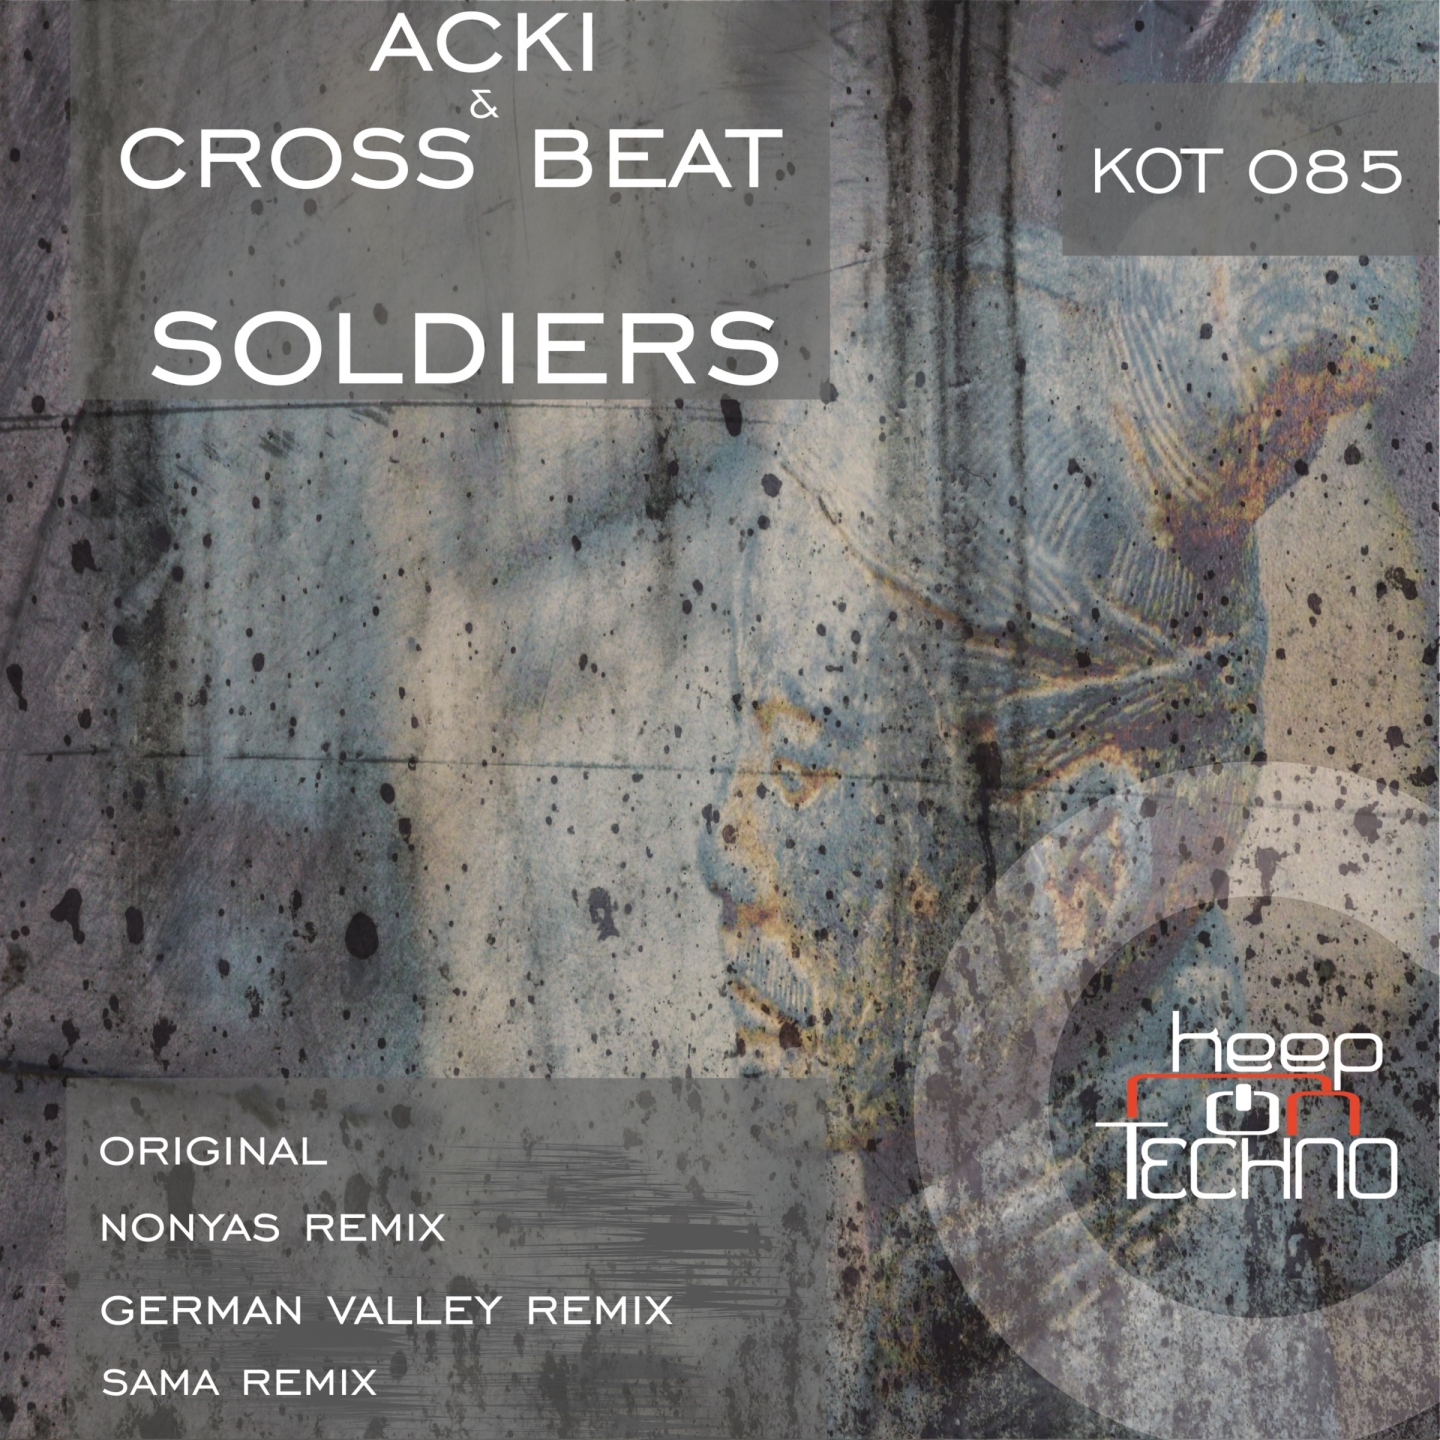 Soldiers (German Valley Remix)